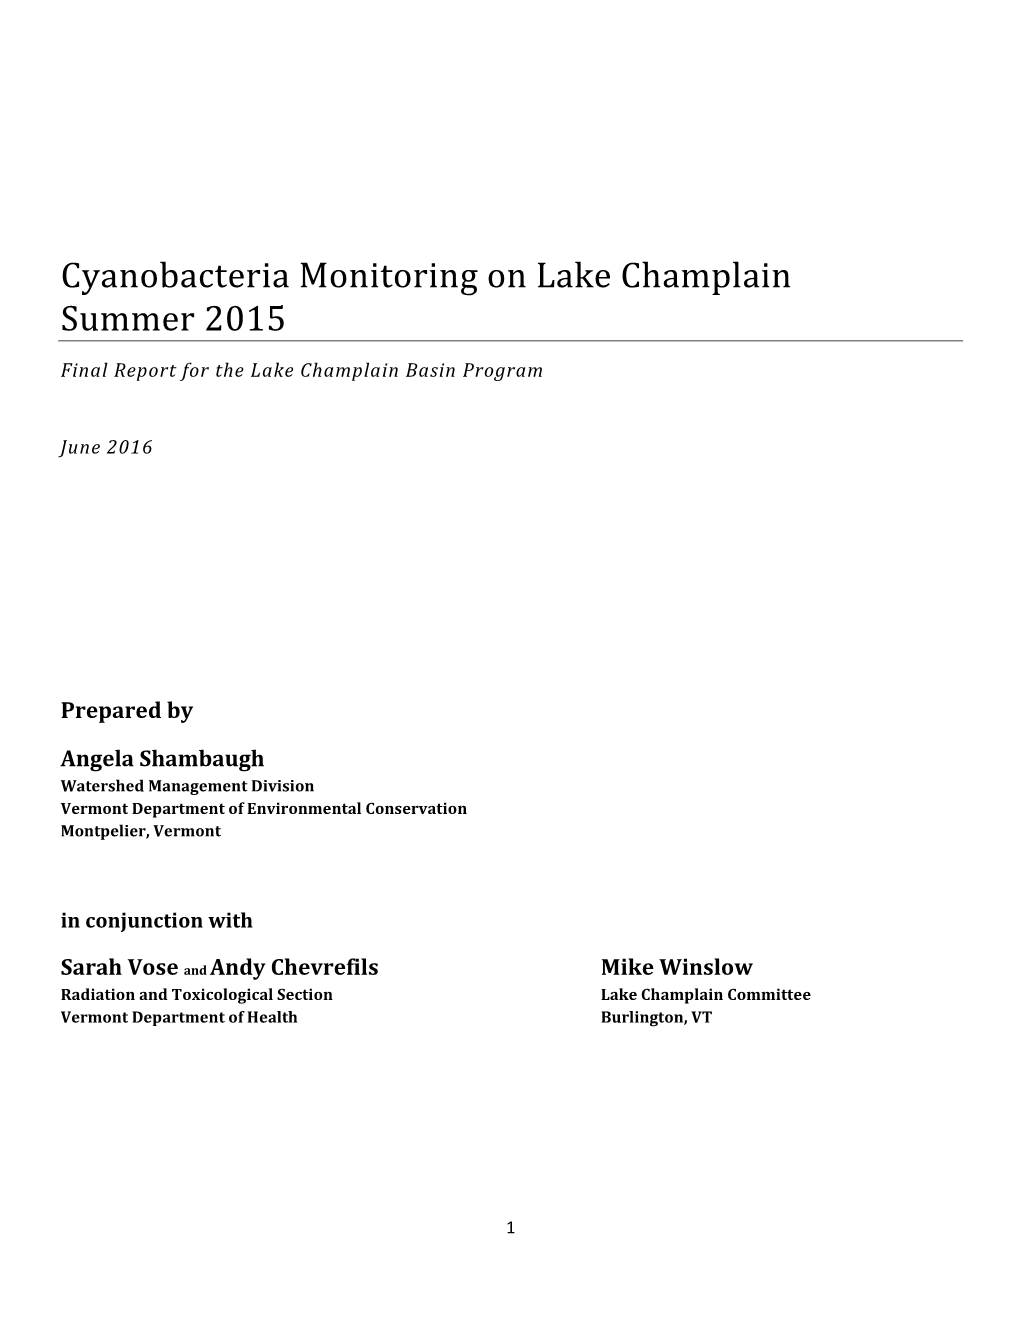 Cyanobacteria Monitoring on Lake Champlain Summer 2015